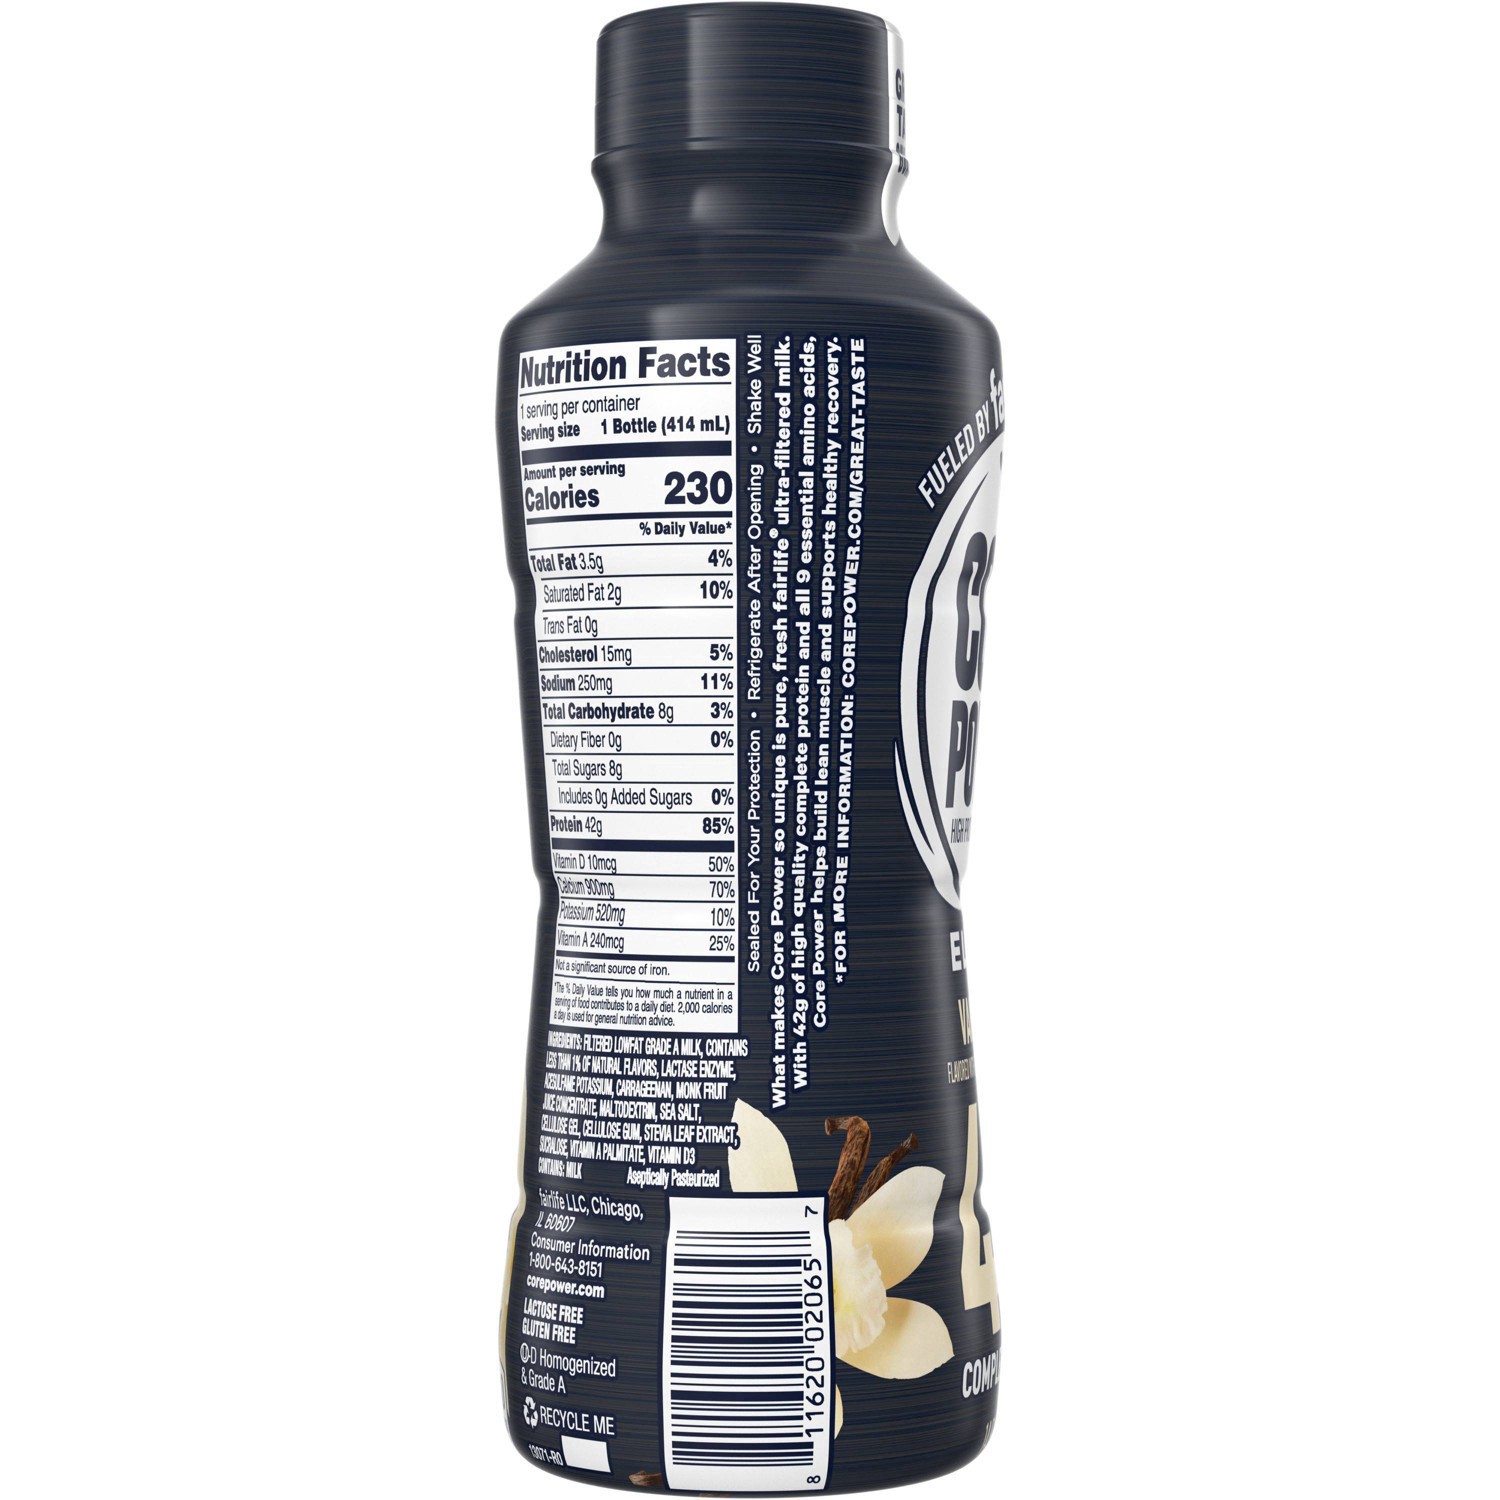 slide 7 of 78, Core Power High Protein Elite Vanilla Milk Shake 14 fl oz, 14 fl oz